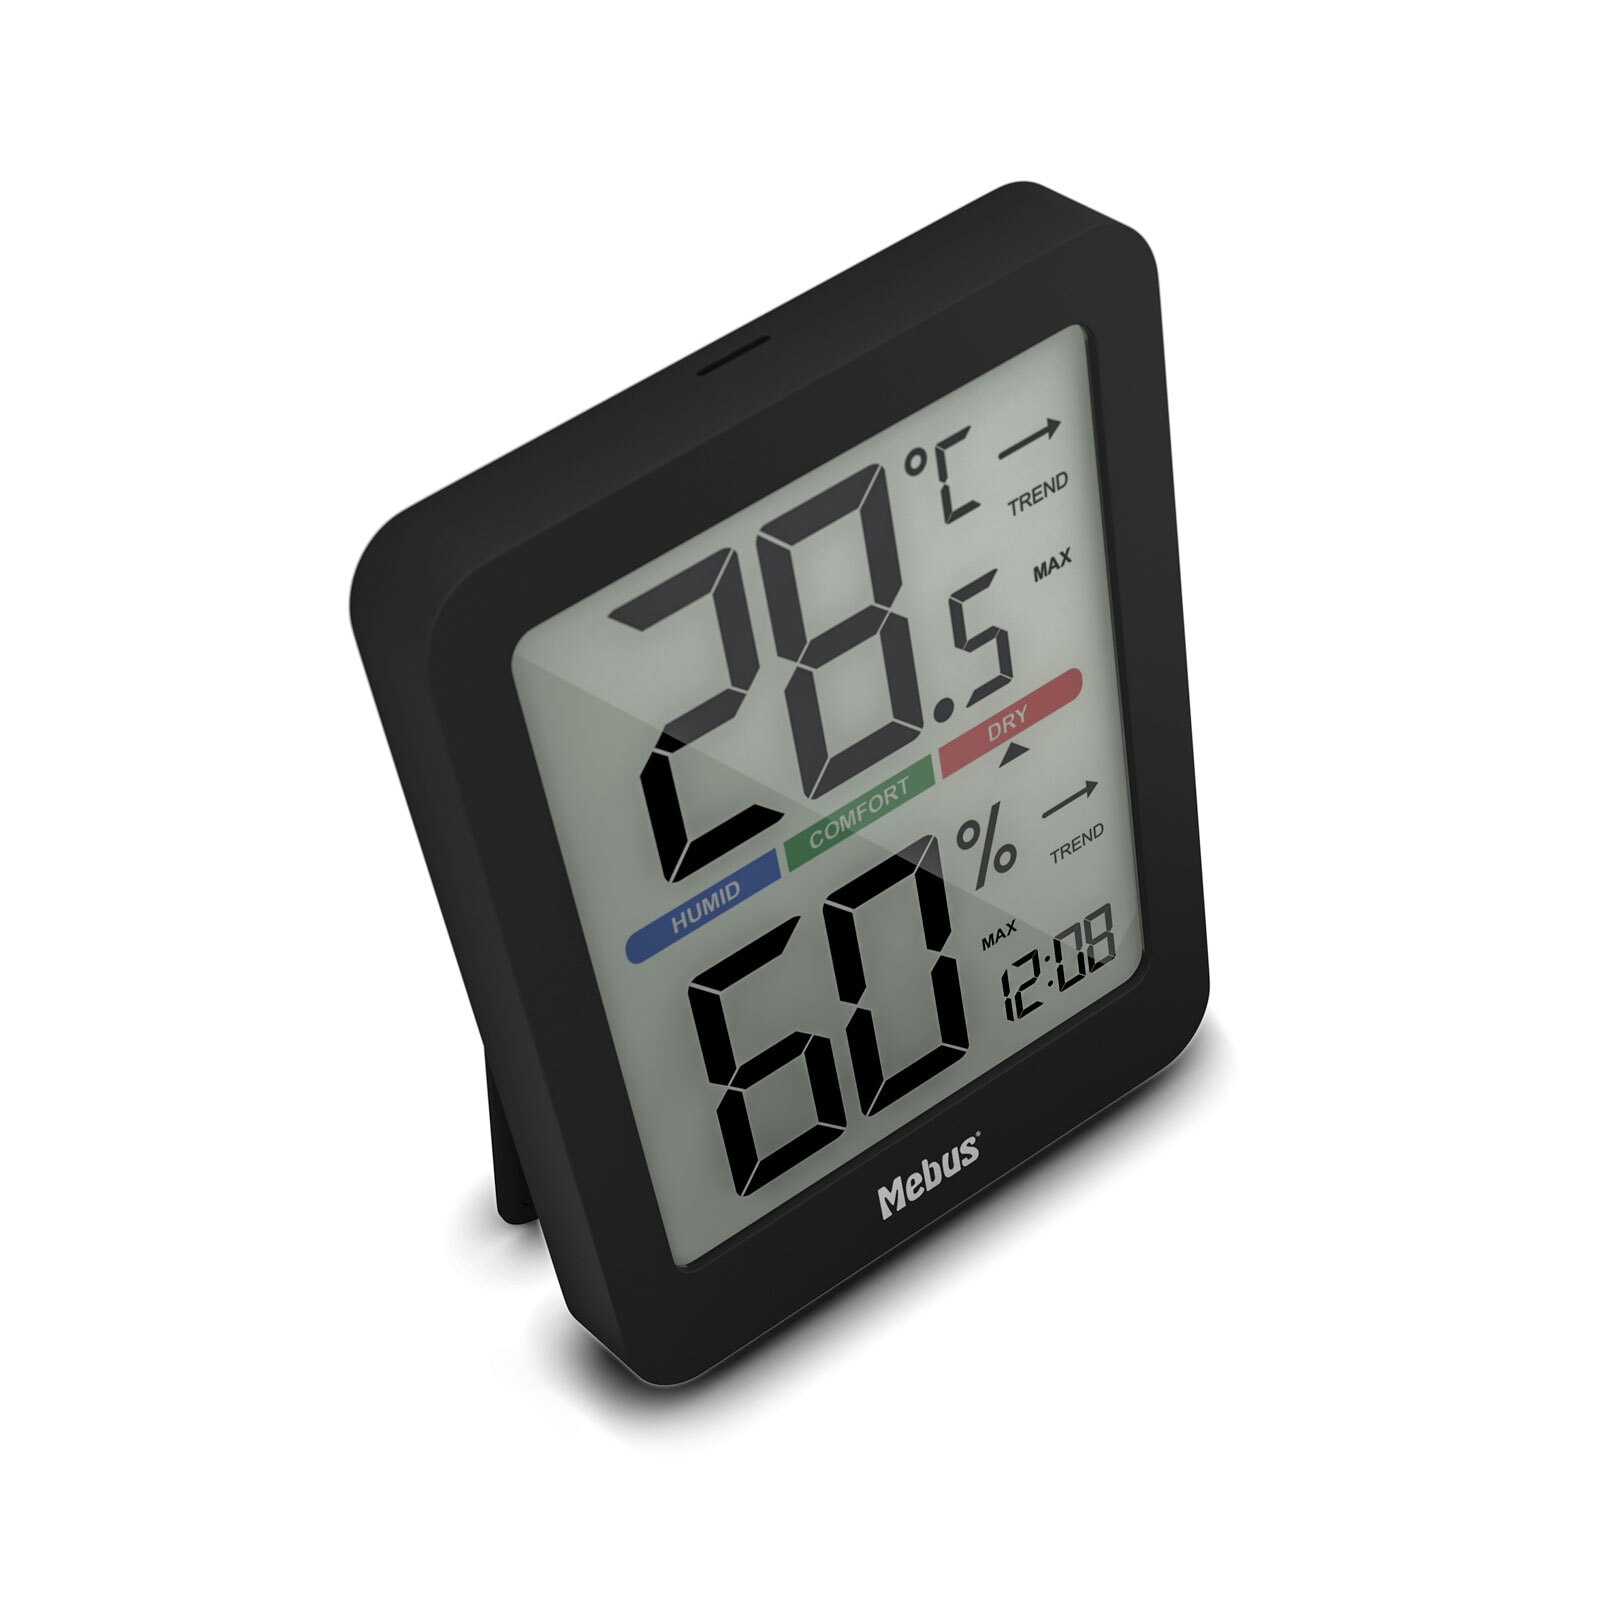 Mebus Klimastation Thermo-Hygrometer schwarz